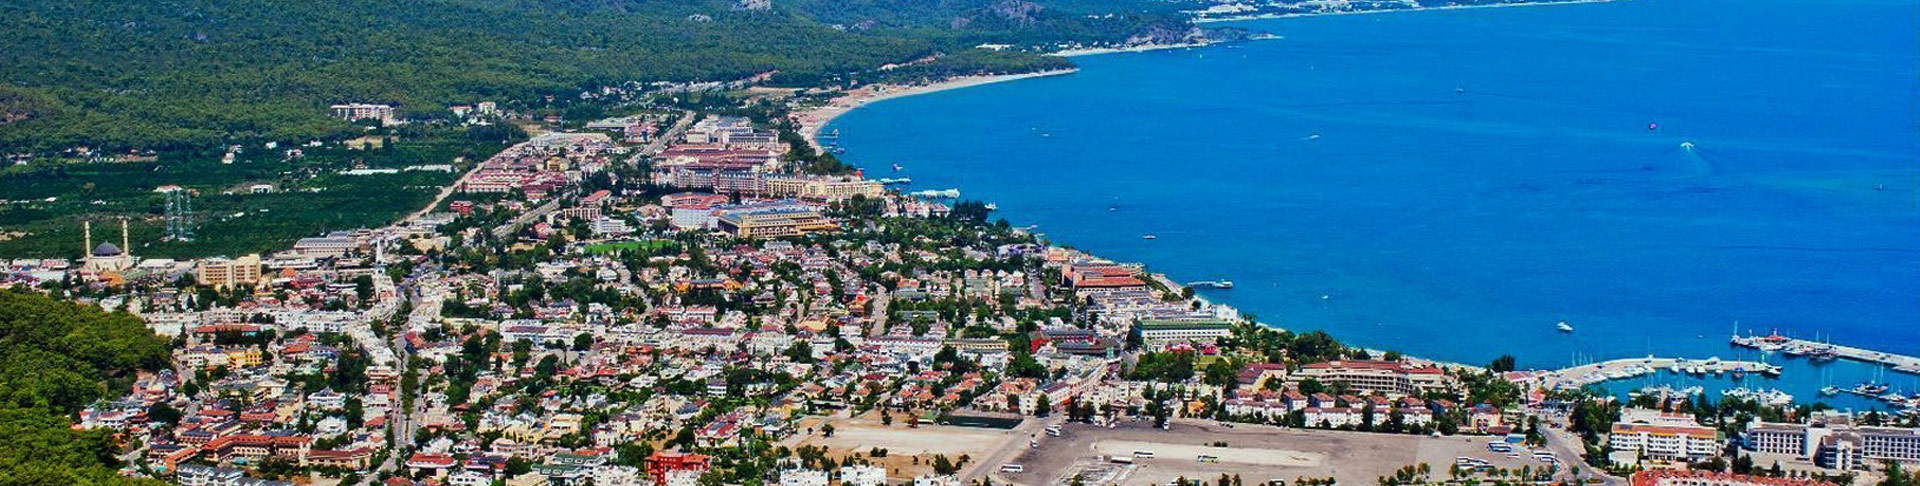 Kemer luchthaven taxi transfer van-naar vakantie hotel vliegveld transfers Antalya Luchthaven vakantiereizen Turkije